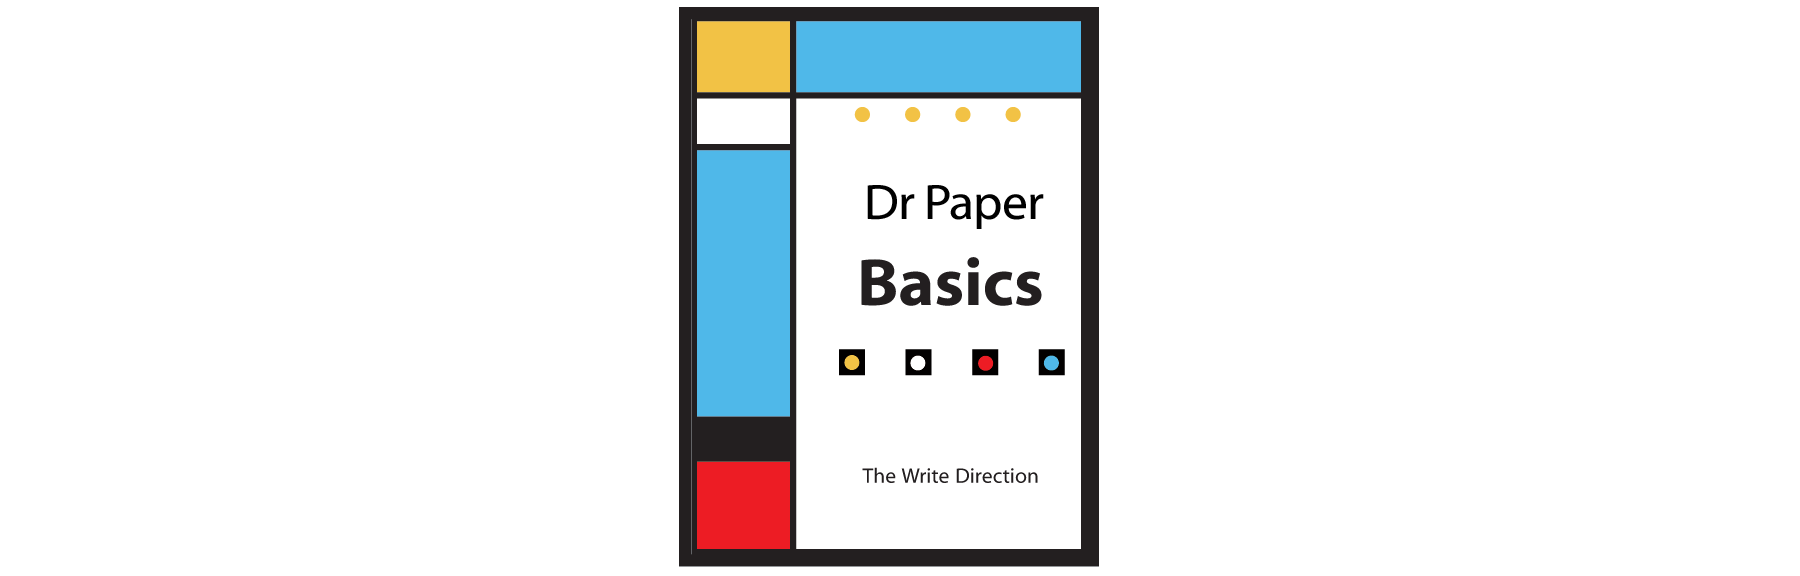 Dr Paper Software Help